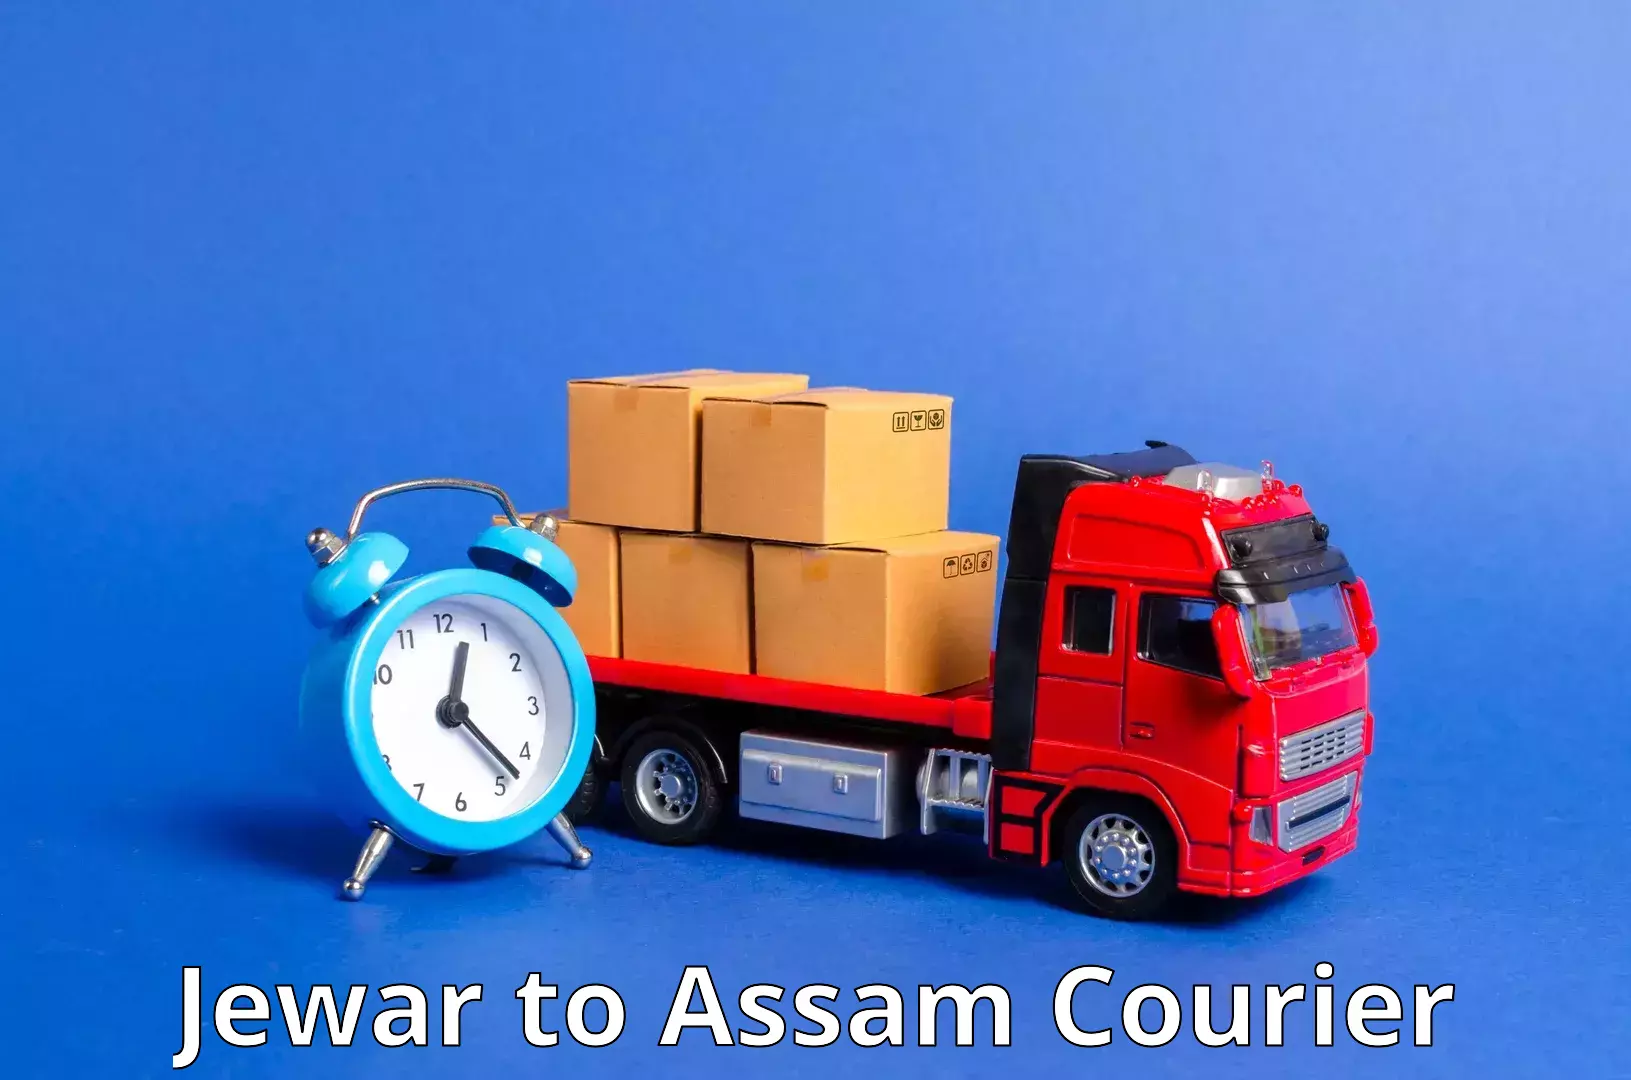 Cost-effective courier options Jewar to Assam